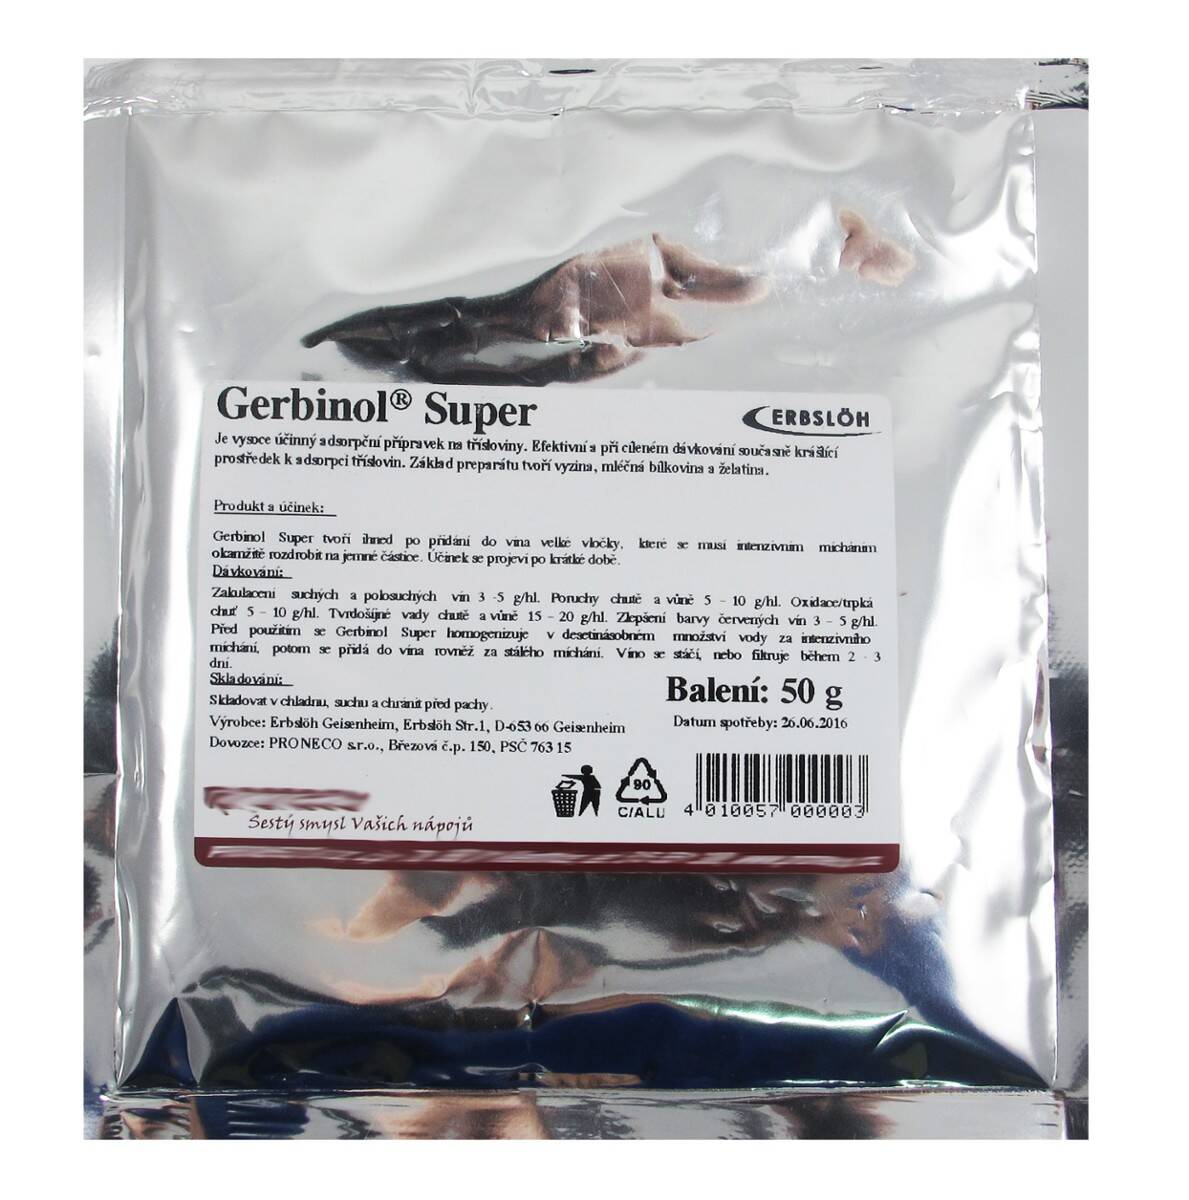 Gerbinol Super 50 g adsorbcja tanin (Photo 1)